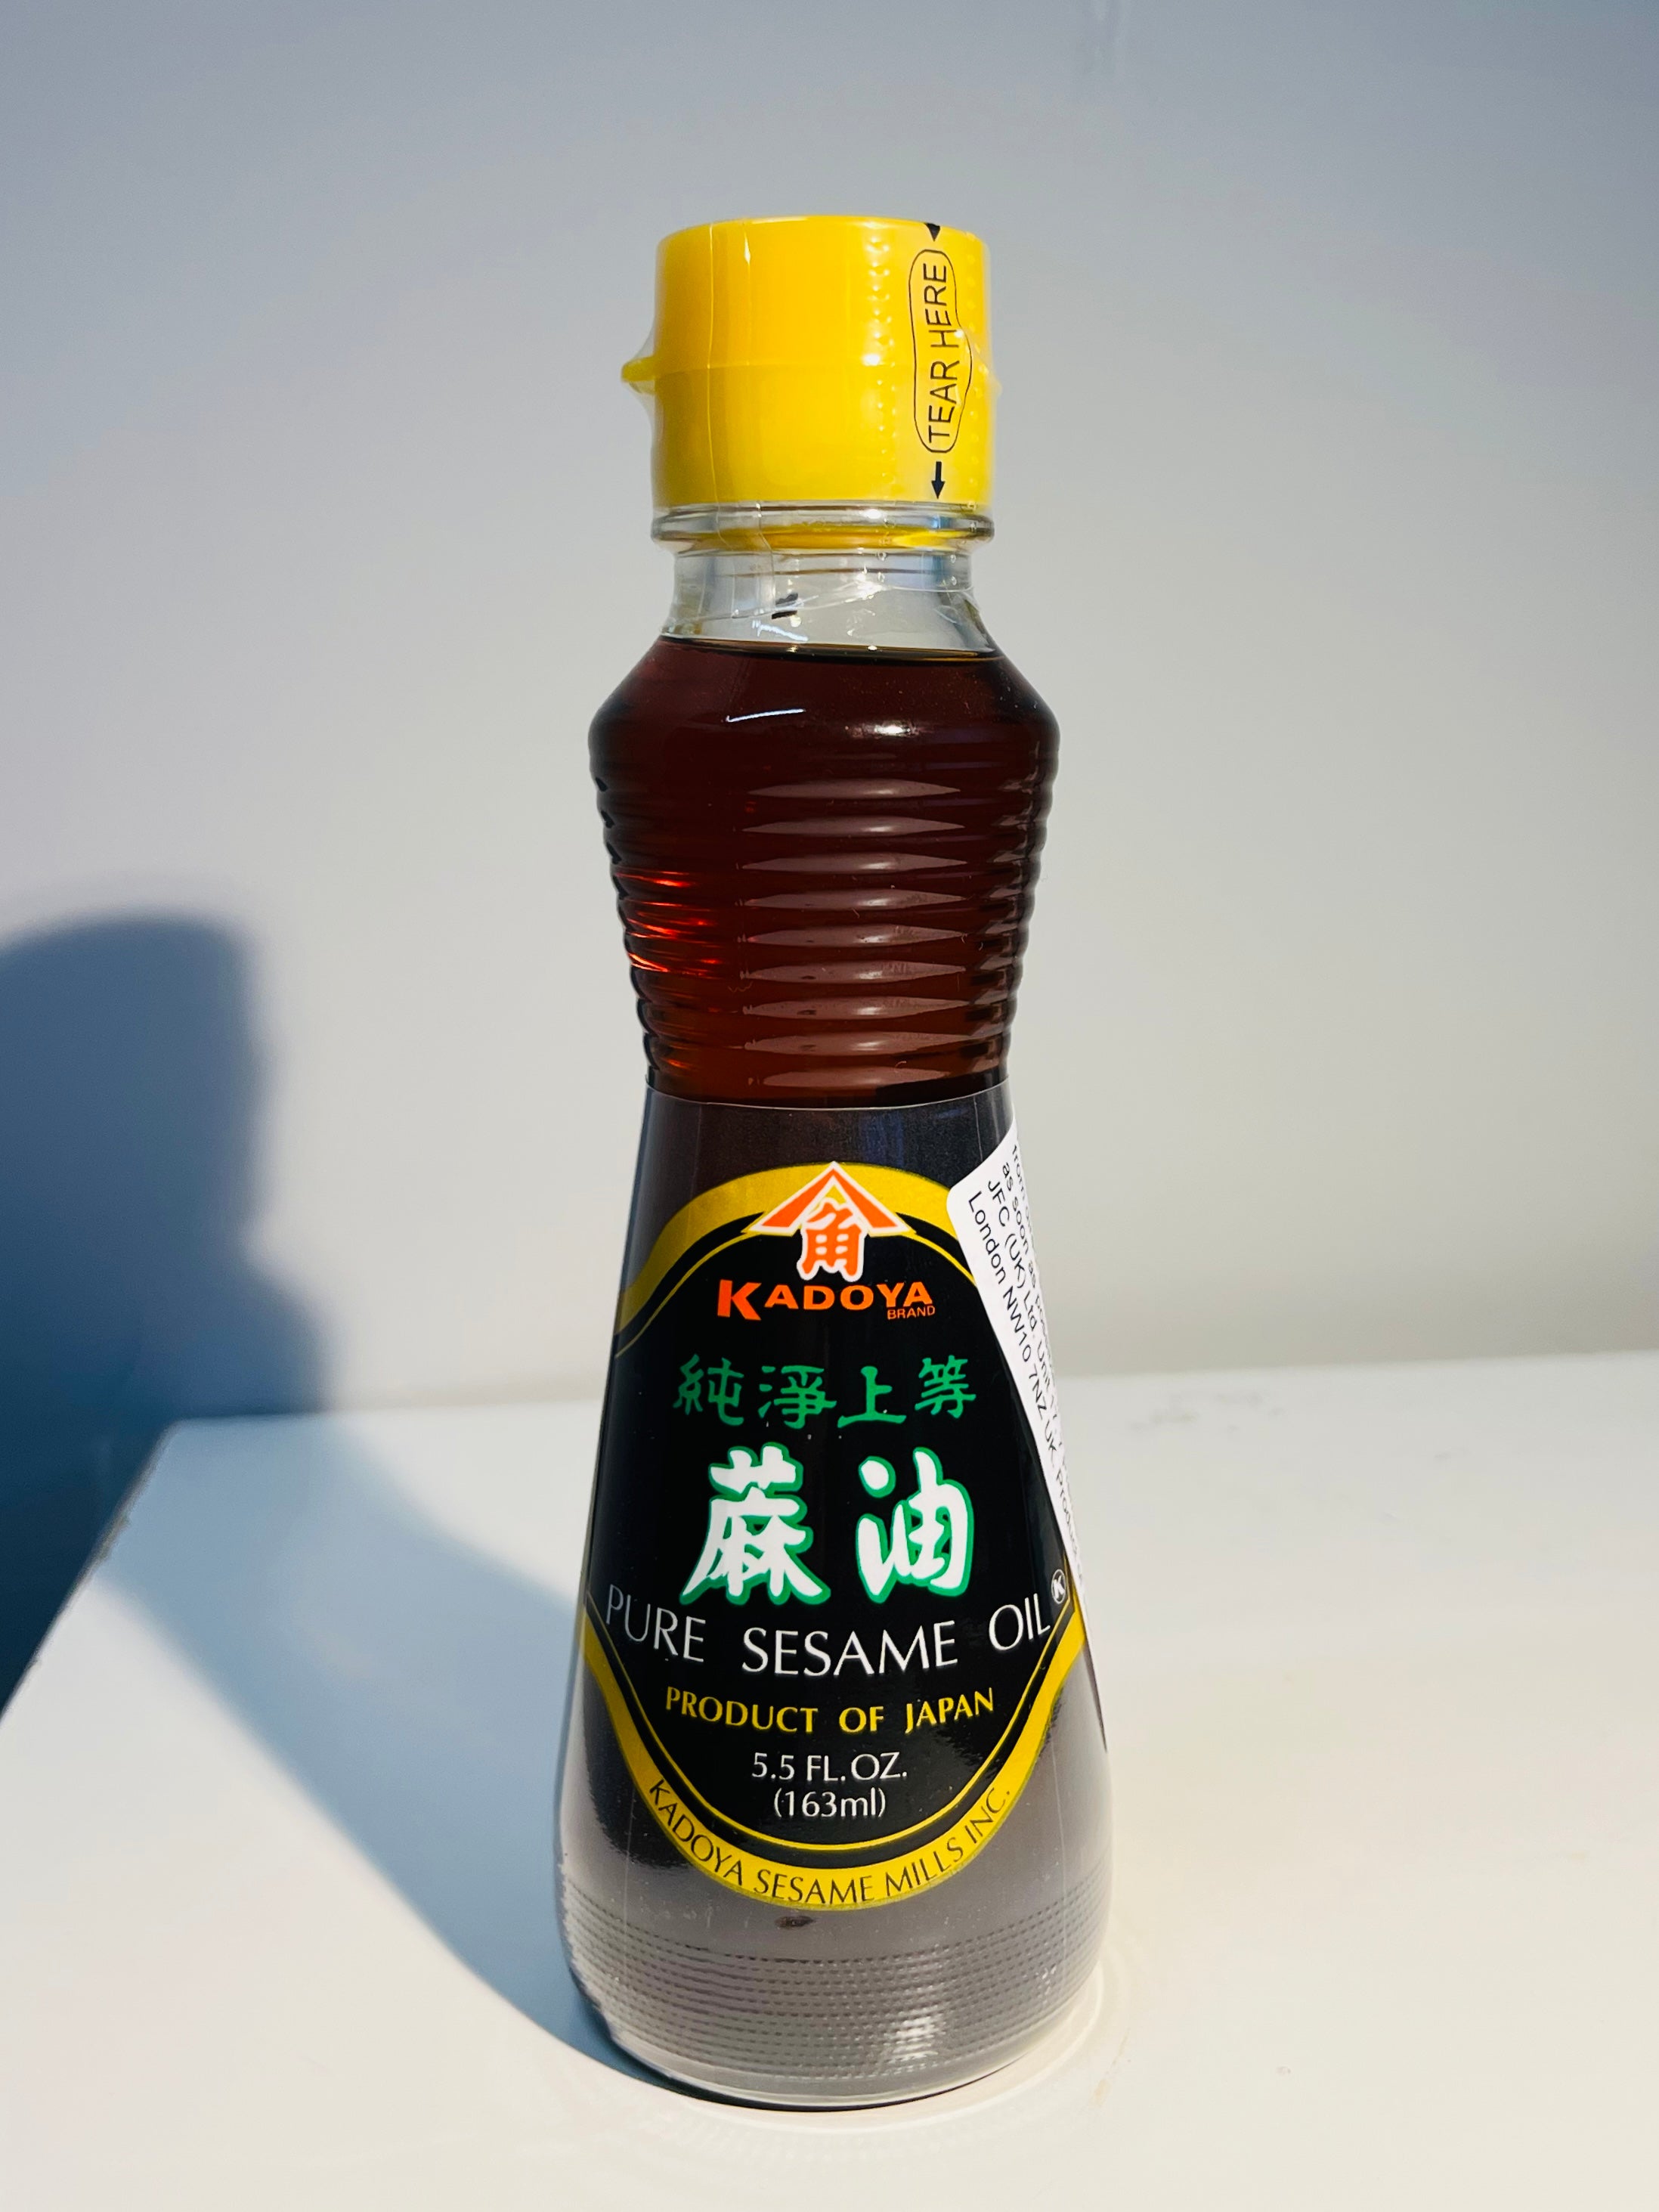 Kadoya Pure Sesame Oil 163ml at La Mart 辣妈超市– La Mart Asian